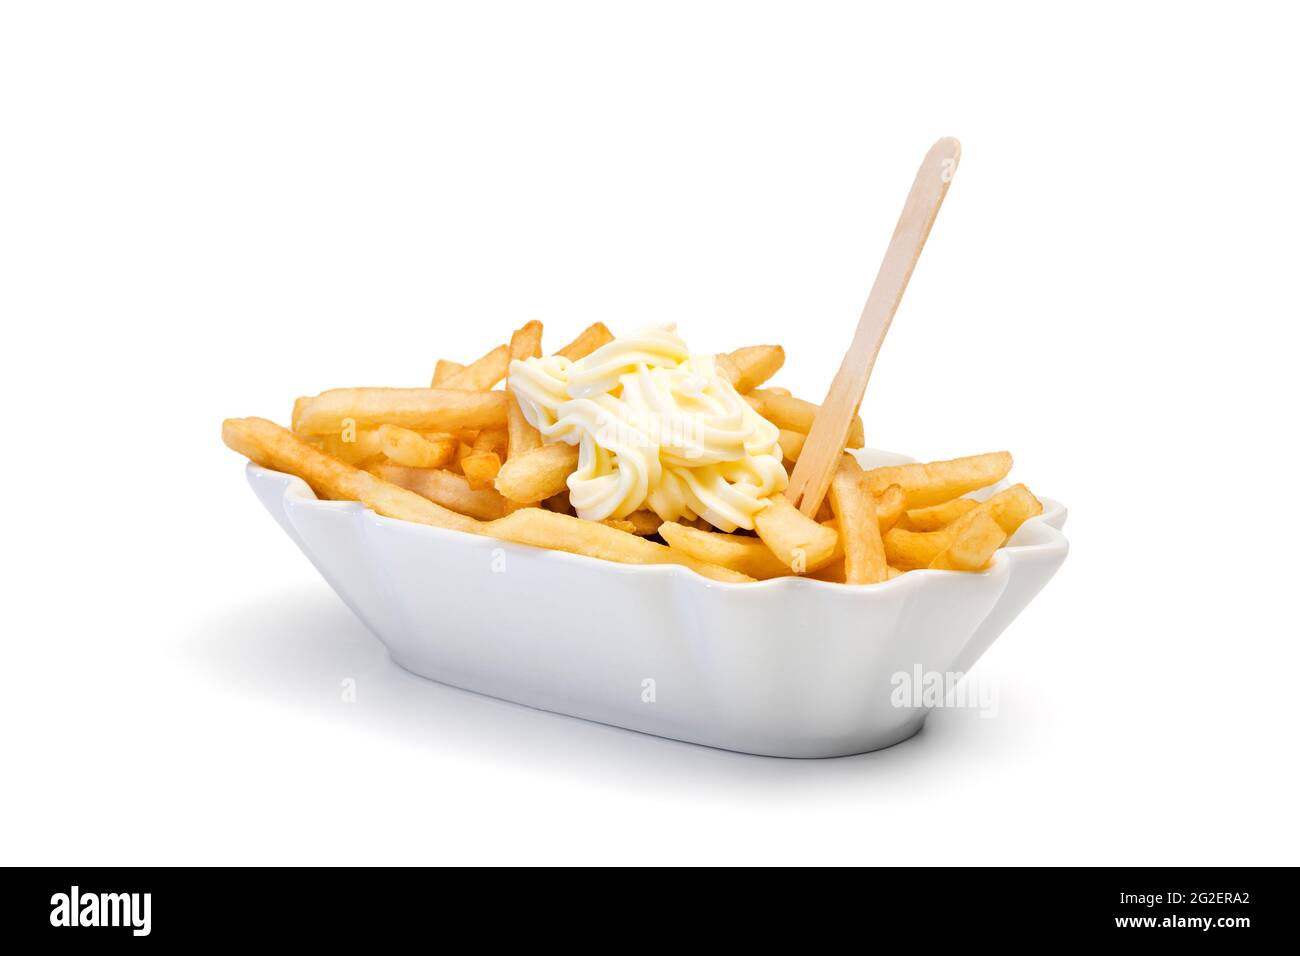 patatine fritte con maionese in ciotola bianca, isolate Foto stock - Alamy